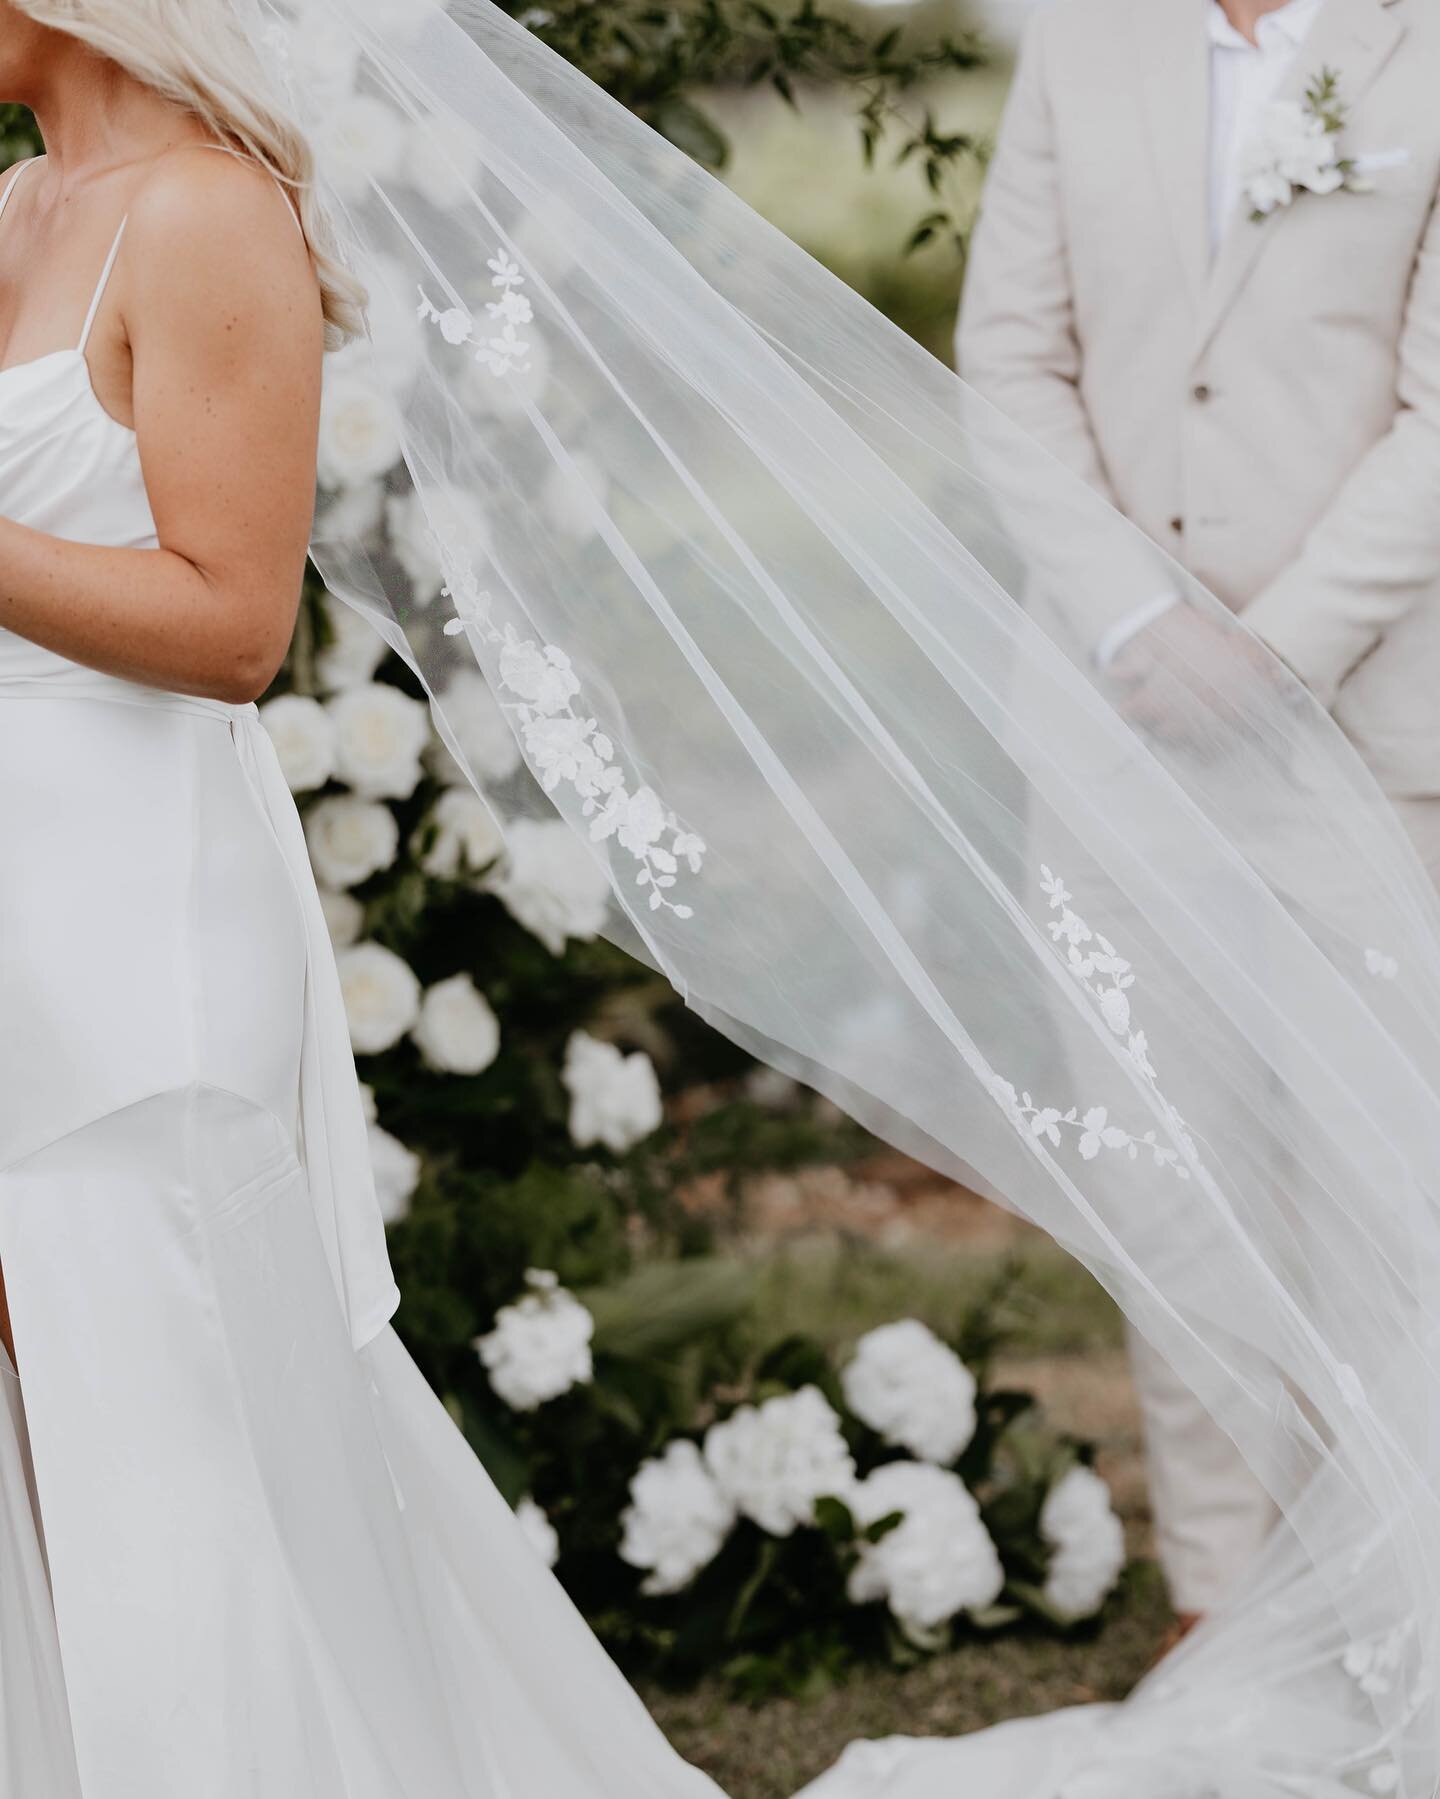 The veil having it's moment 💫

#adelaideweddingphotographer #weddingveil #bridalfashion #editorialphotographer